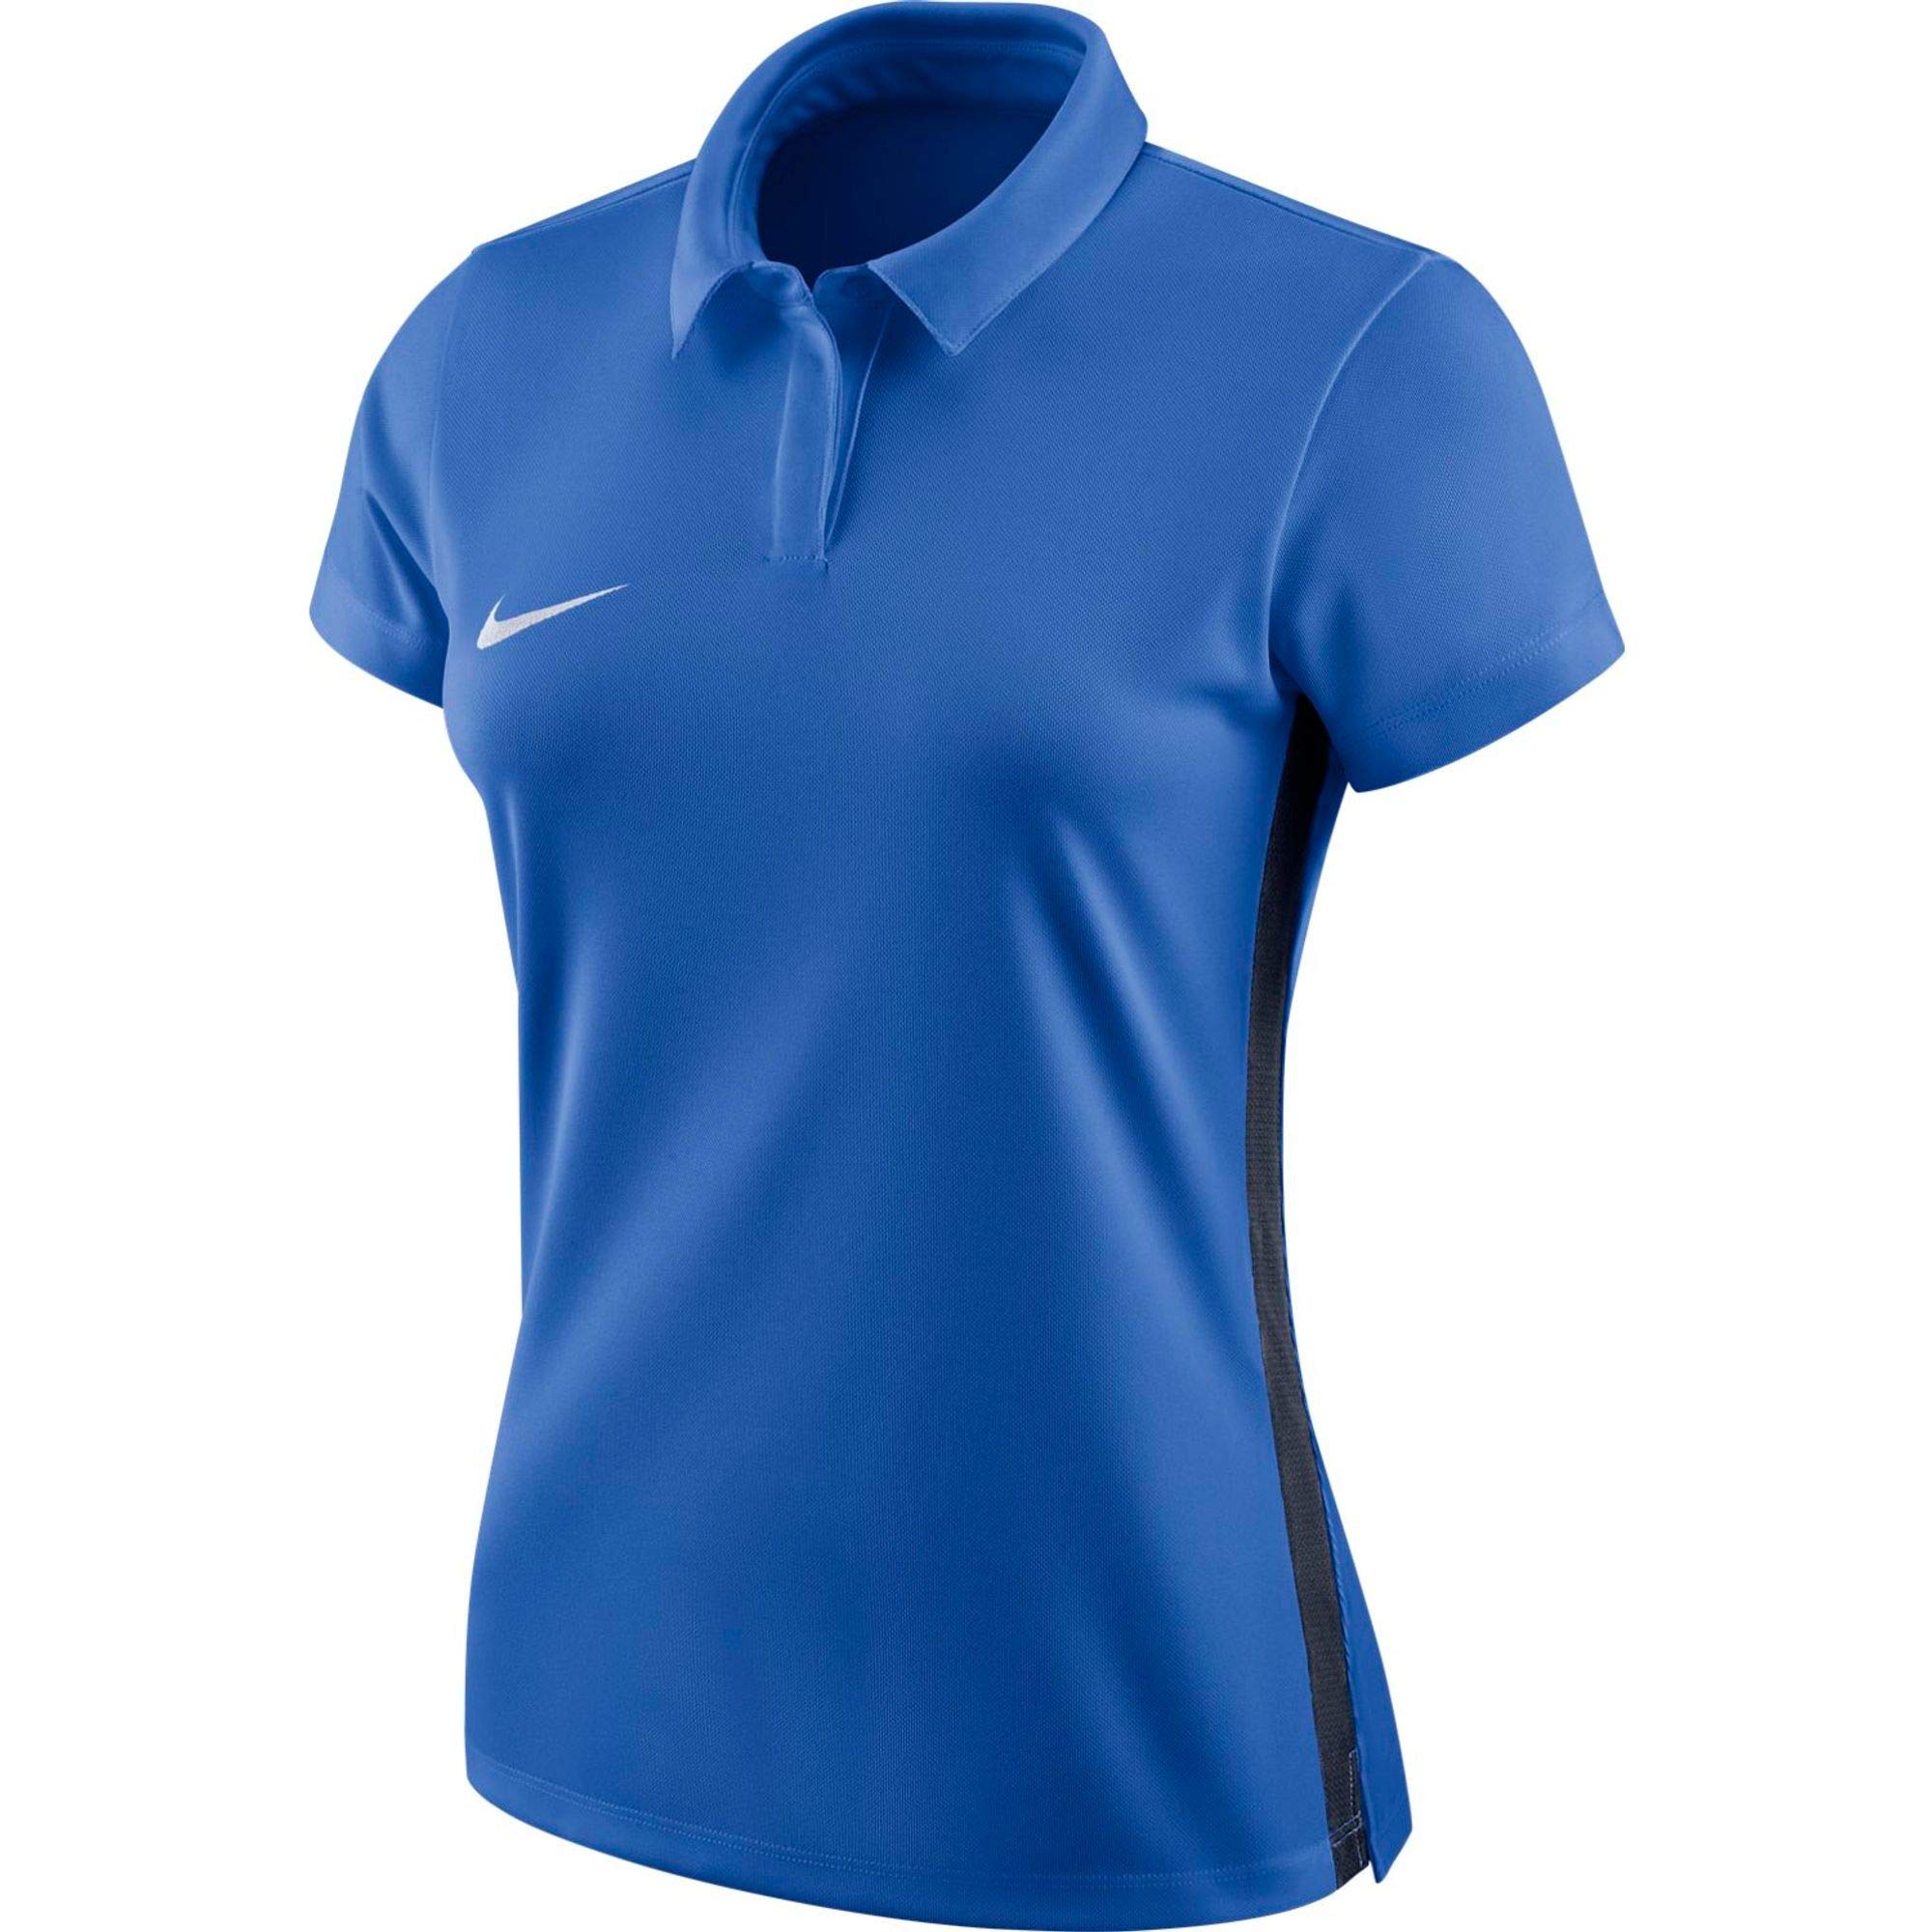 Nike Damen Dry Academy 18 Poloshirt, Royal Blue/Obsidian/White, XS